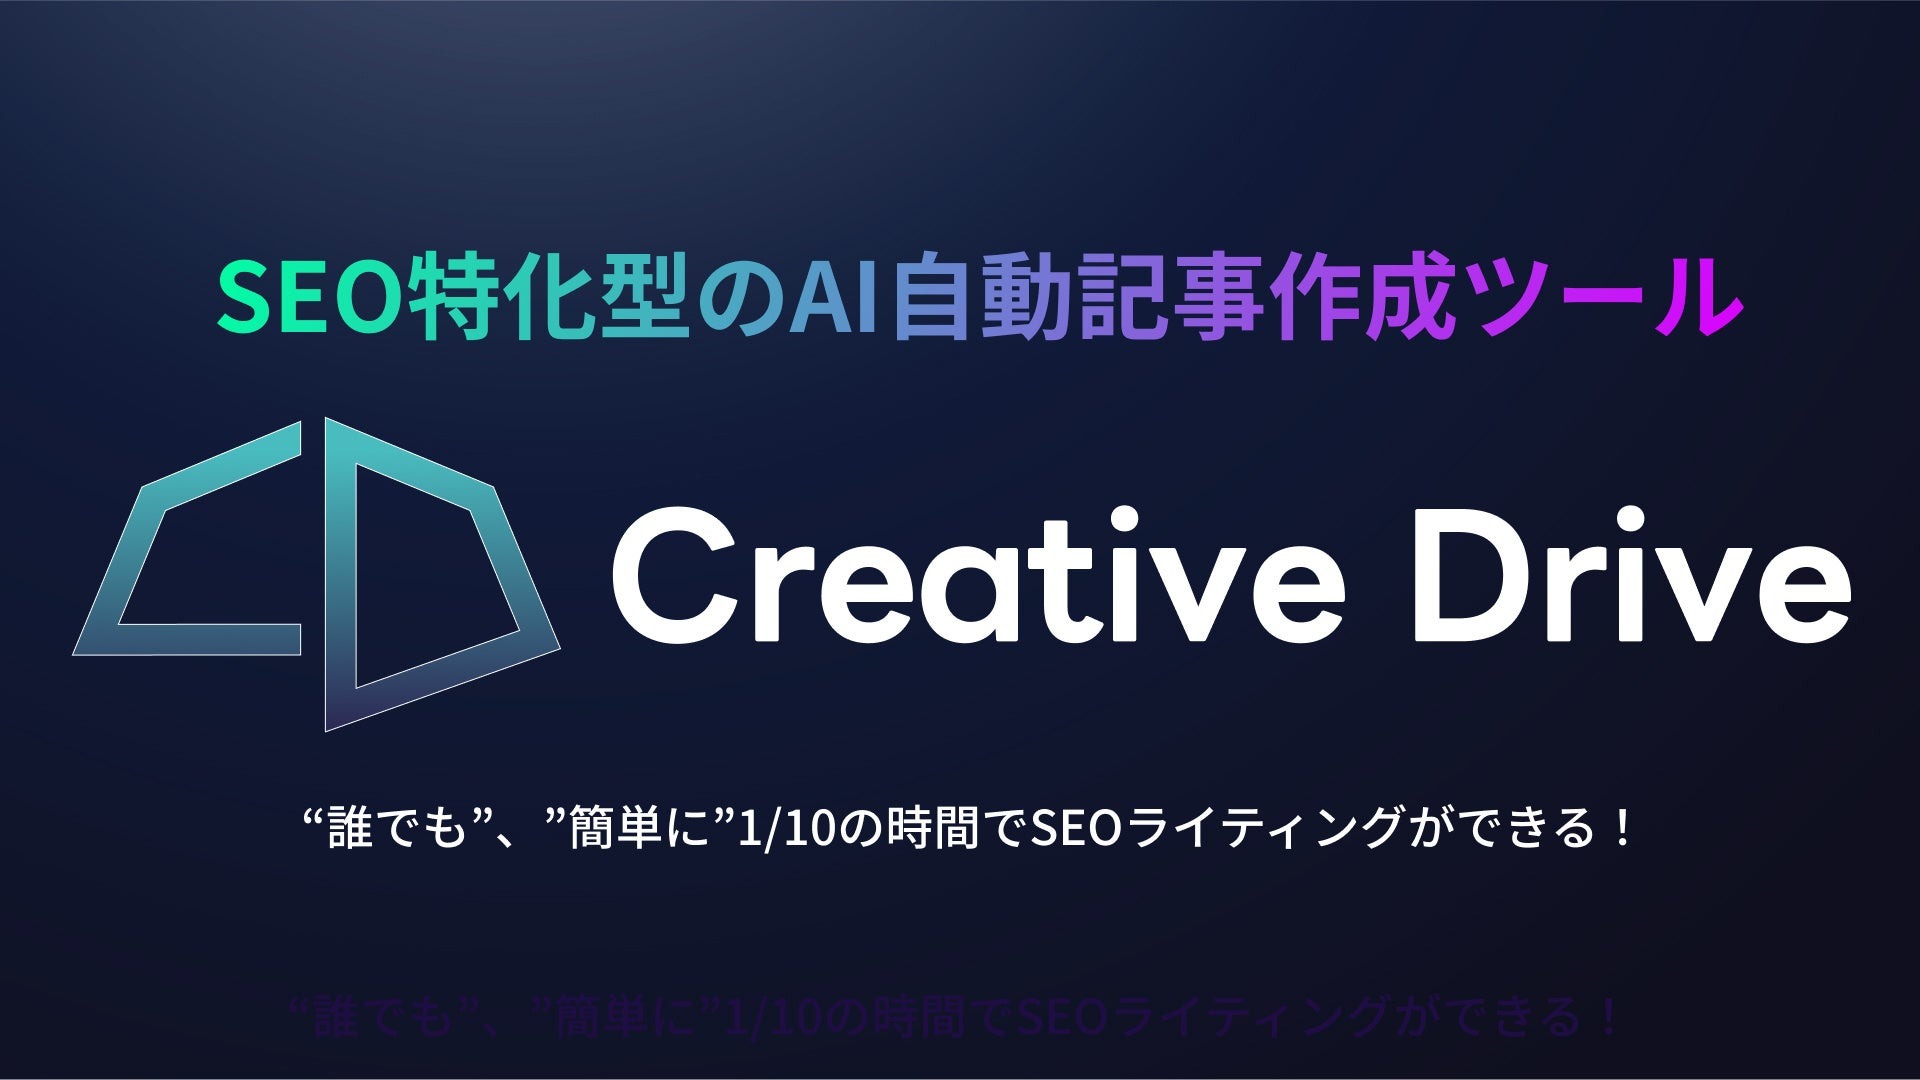 Creative Drive